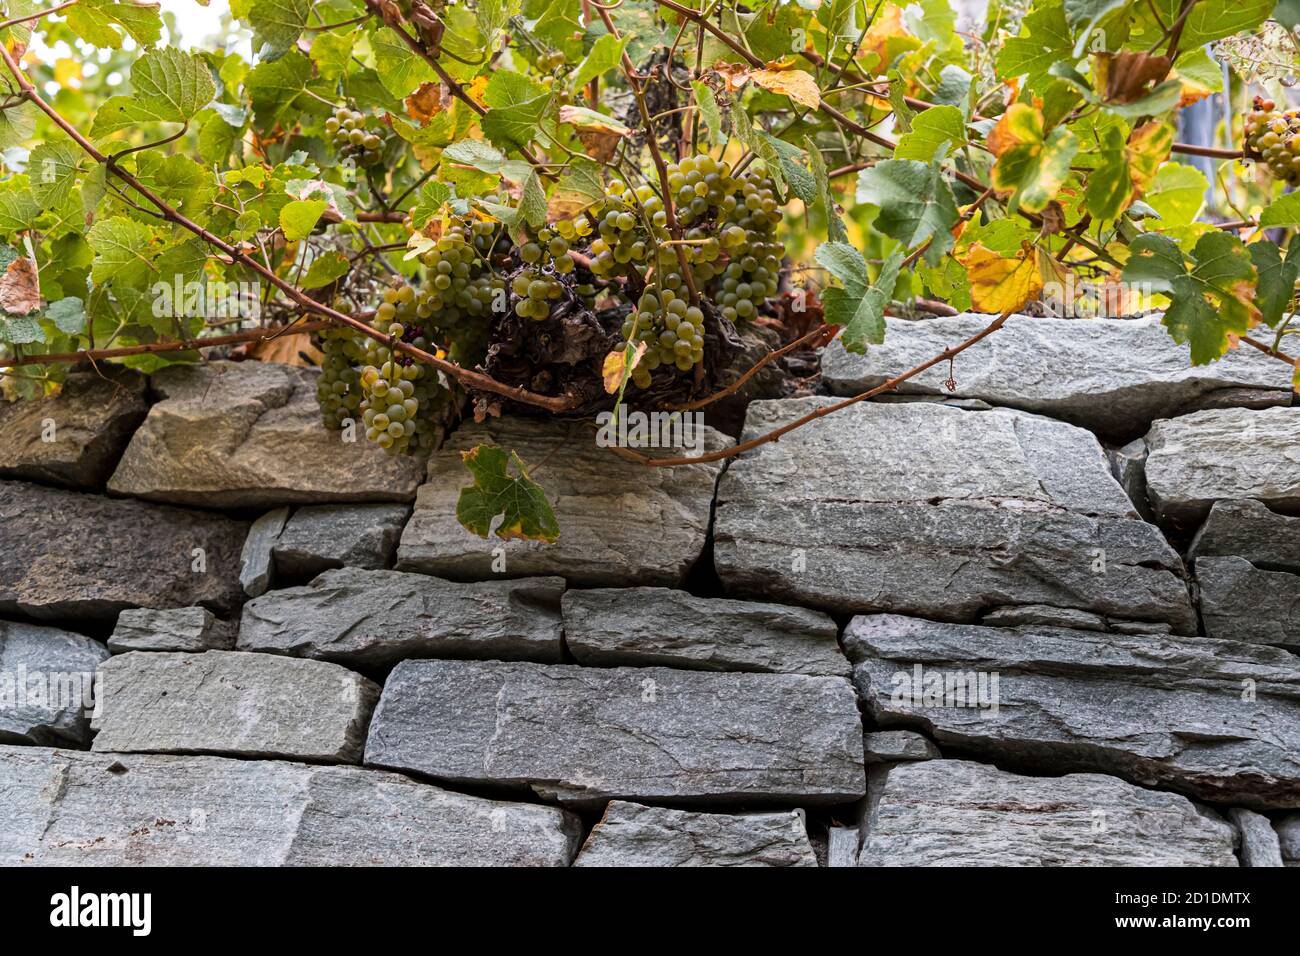 Visperterminen's highest vineyard of Europe Visp, Switzerland Stock Photo